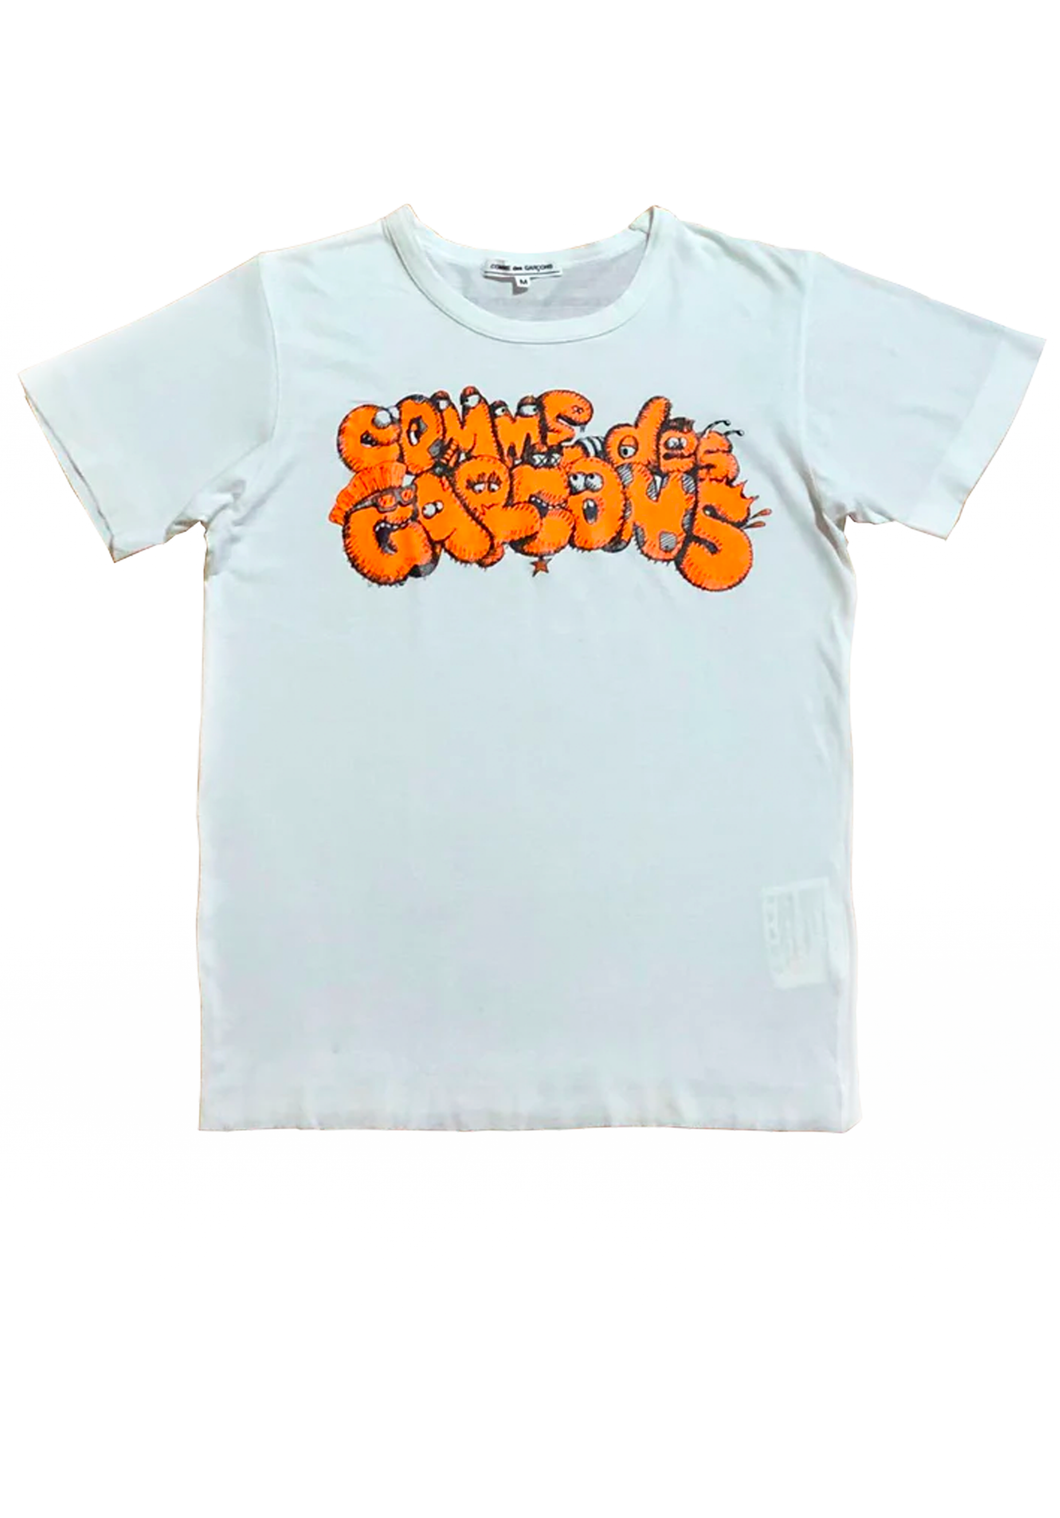 Comme des Garcons x Kaws Orange Logo Shirt